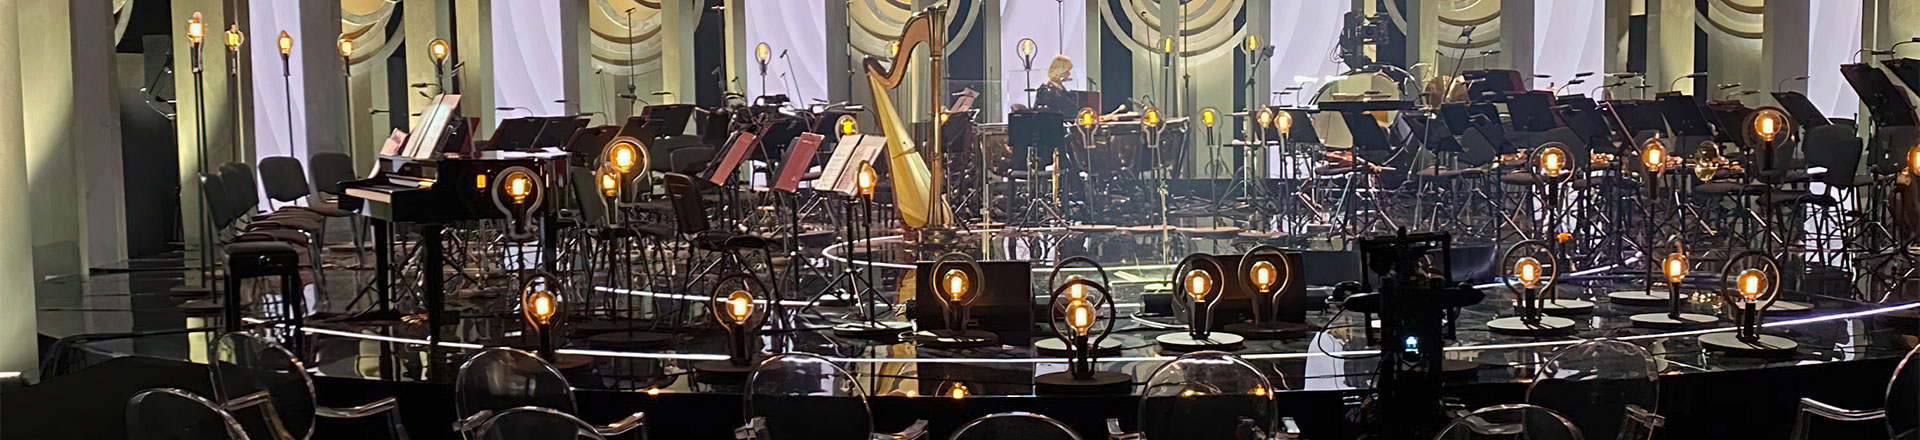 Koncert wielkanocny Andrea Bocelli zrealizowany na Soundcrafcie Vi7000